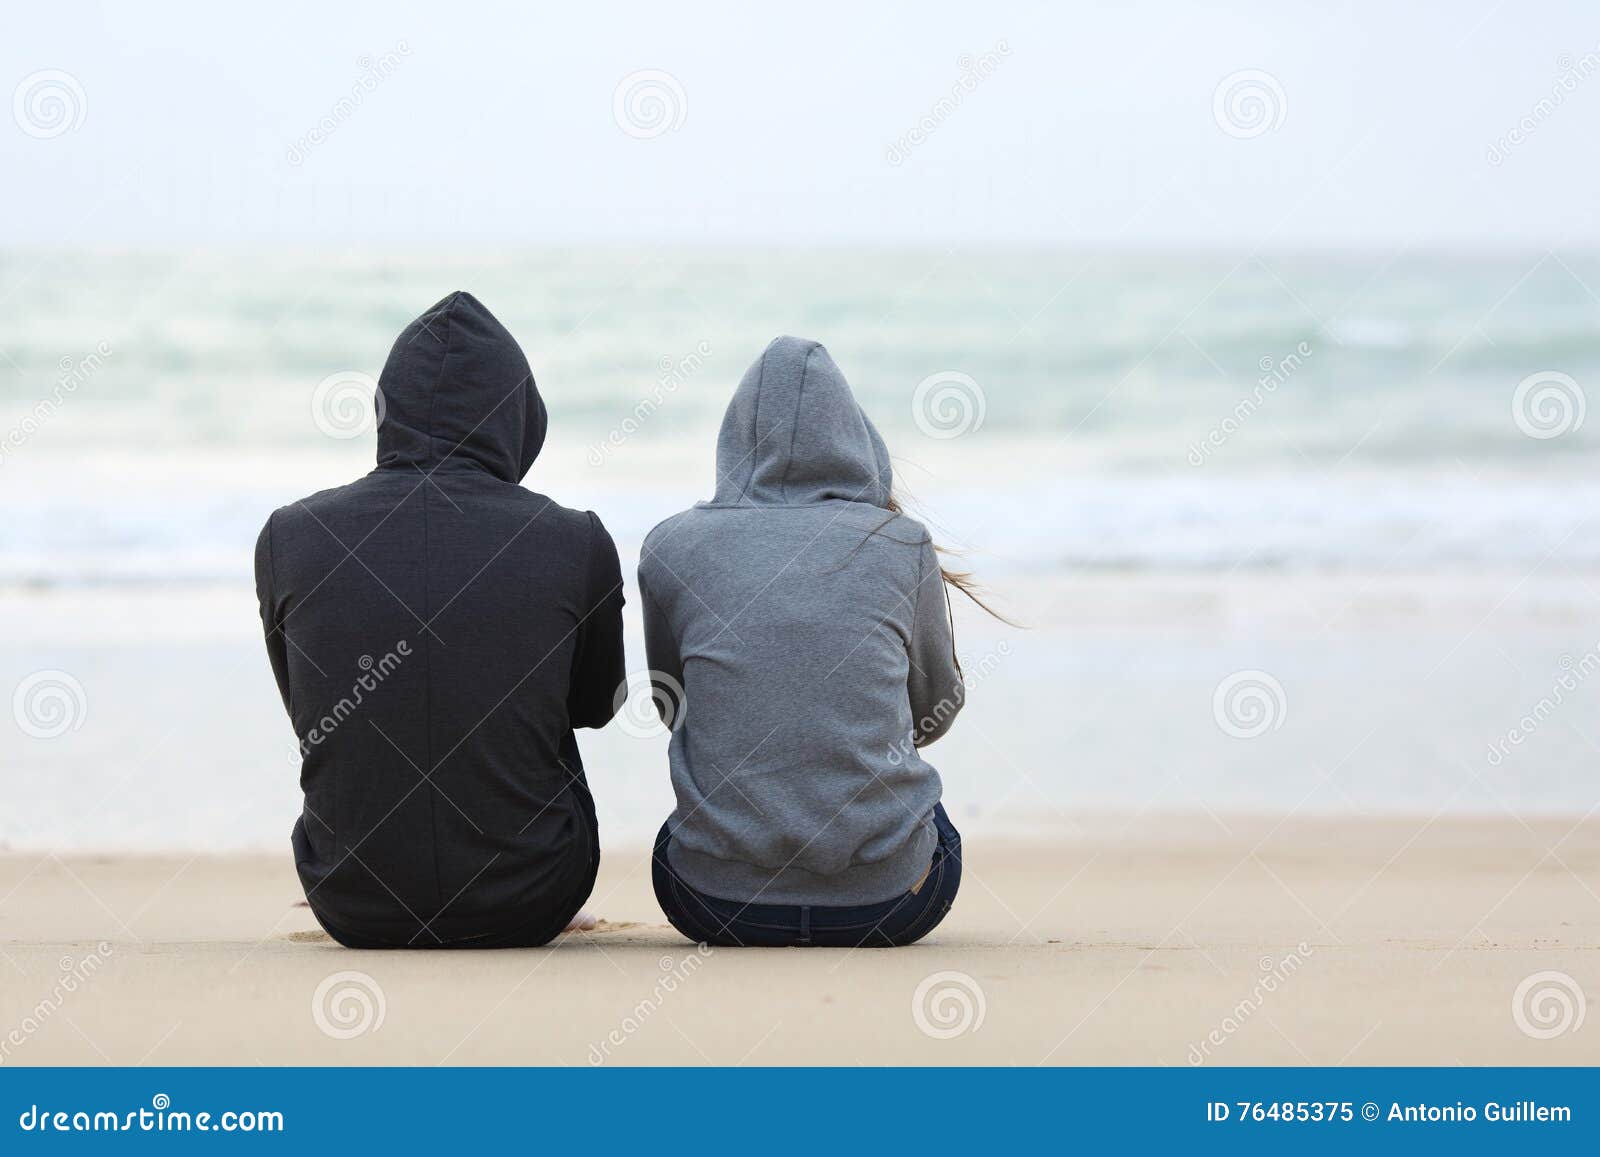 two sad teenagers sitting on the beach